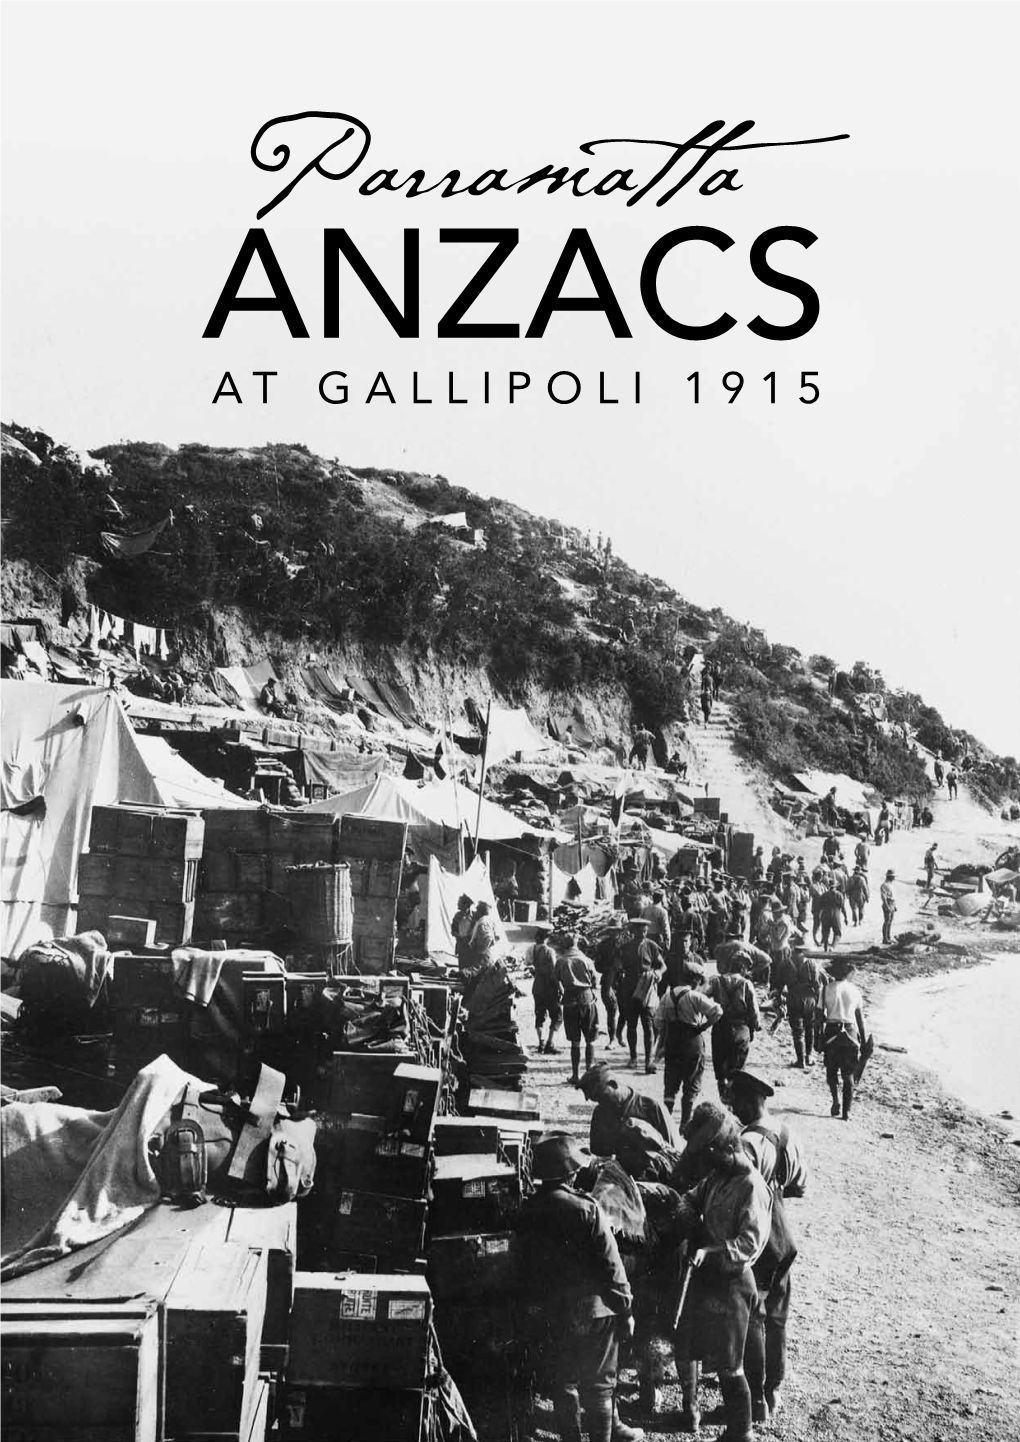 Parramatta ANZACS at Gallipoli 1915